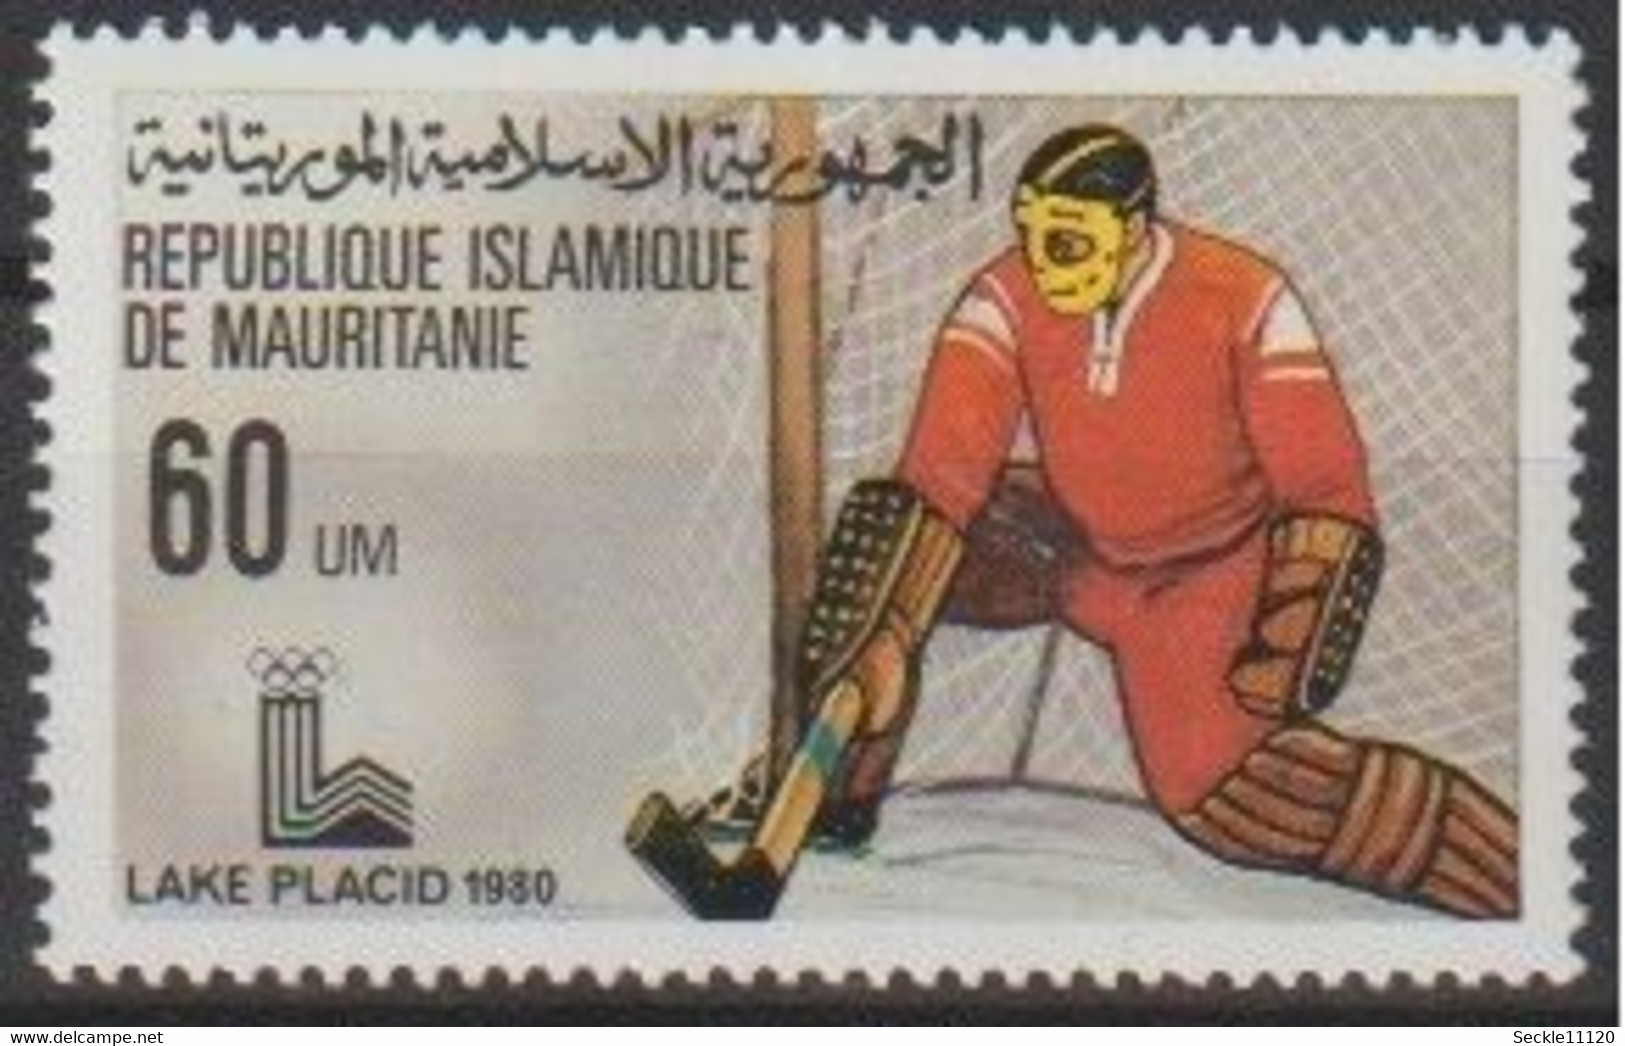 Mauritanie Mauritania - 1979 - 431 / 436 - JO De Lacke Placid - MNH - Mauritanie (1960-...)